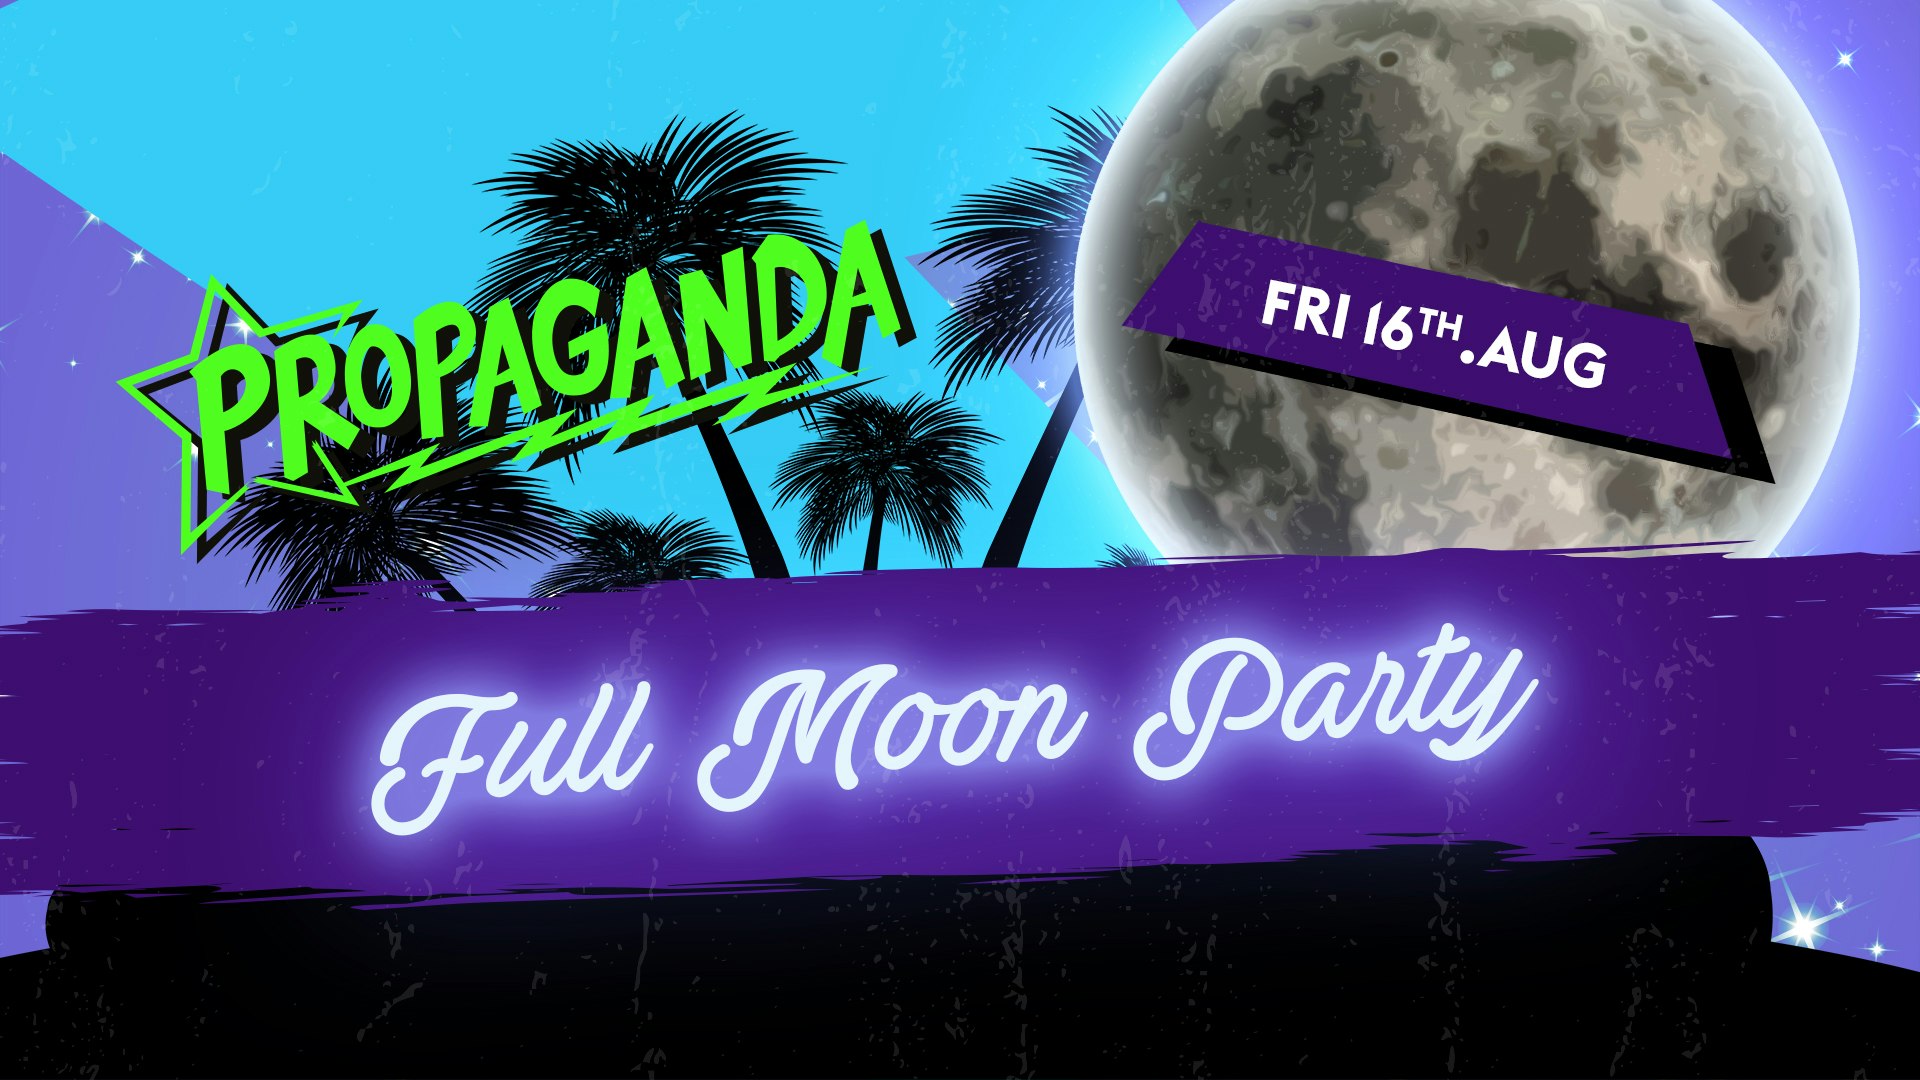 Propaganda Cambridge – Full Moon Party